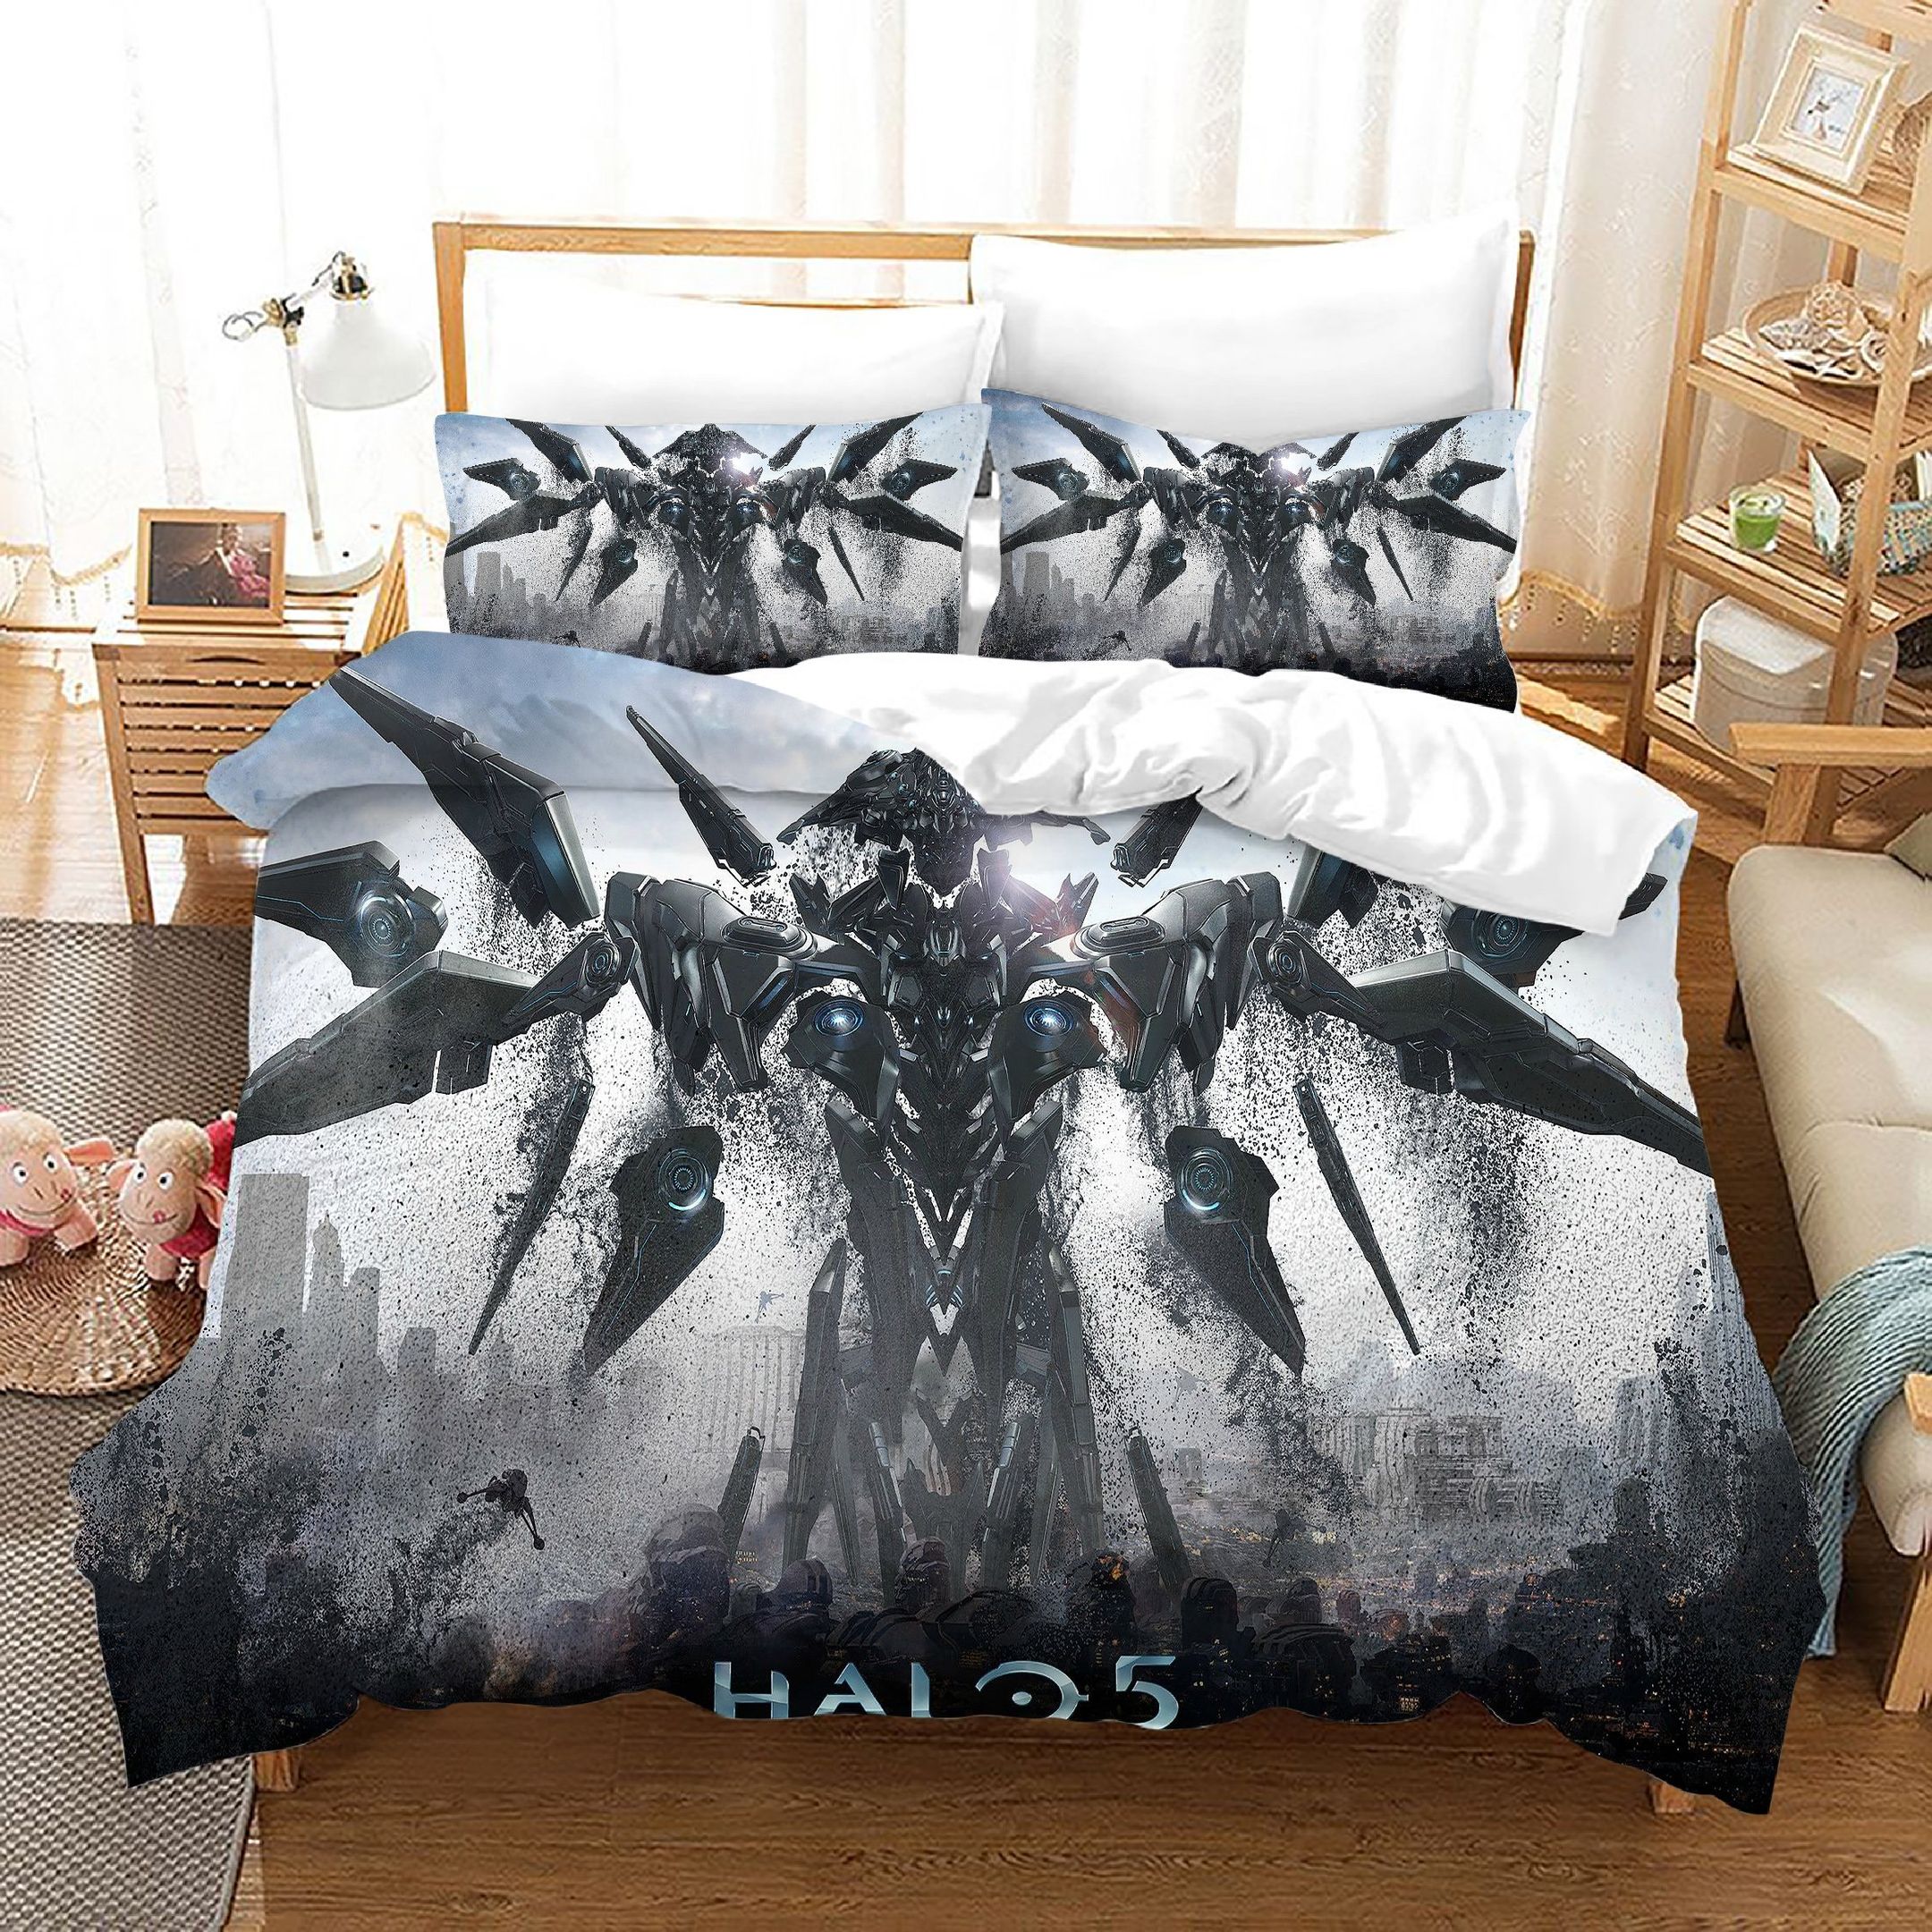 Halo 5 Guardians 13 Duvet Cover Quilt Cover Pillowcase Bedding